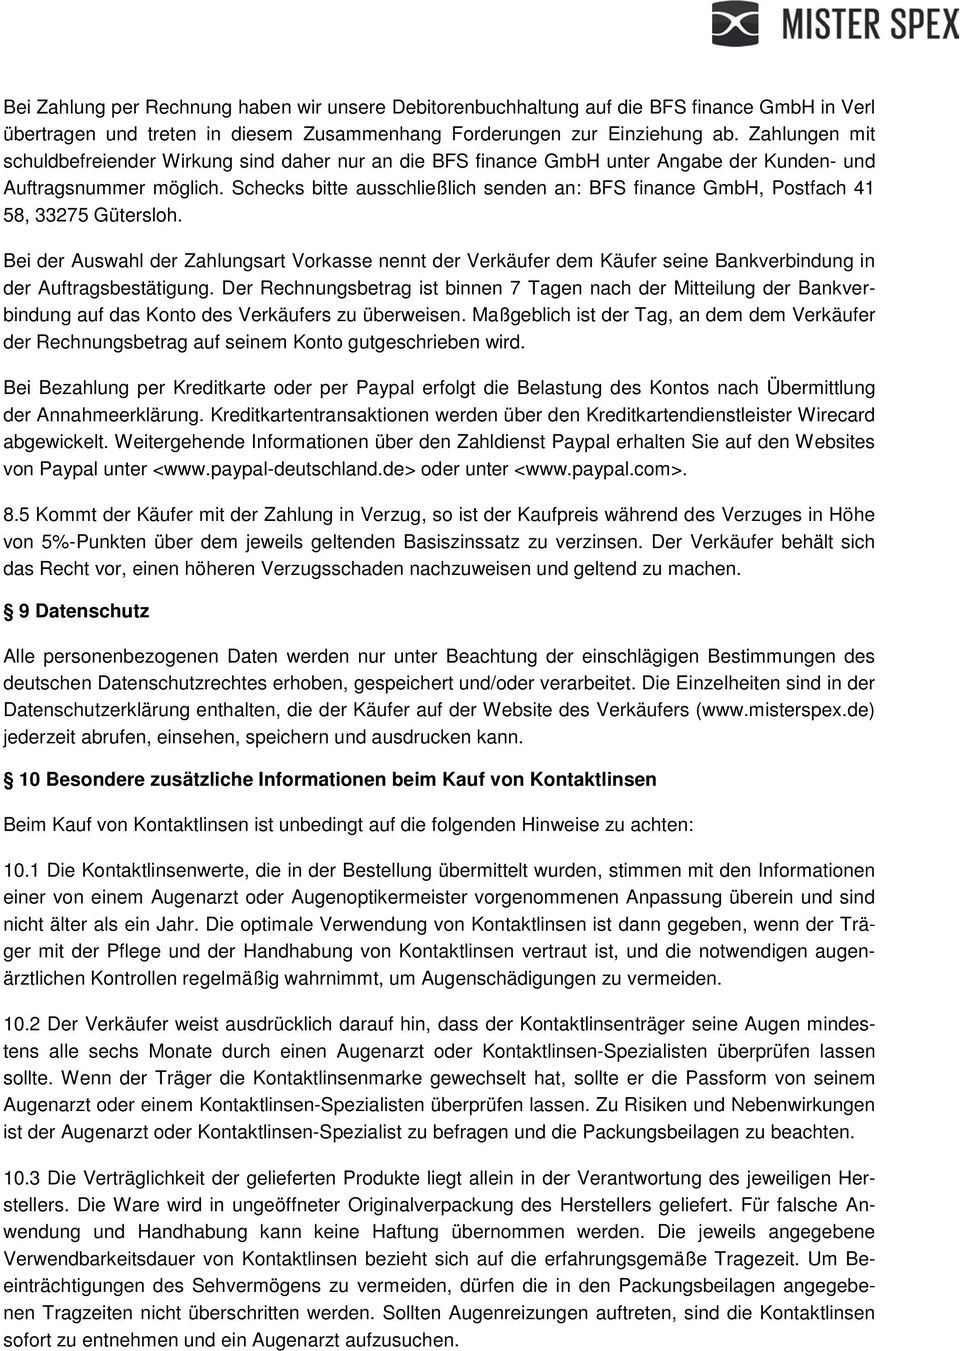 Schecks bitte ausschließlich senden an: BFS finance GmbH, Pstfach 41 58, 33275 Güterslh.